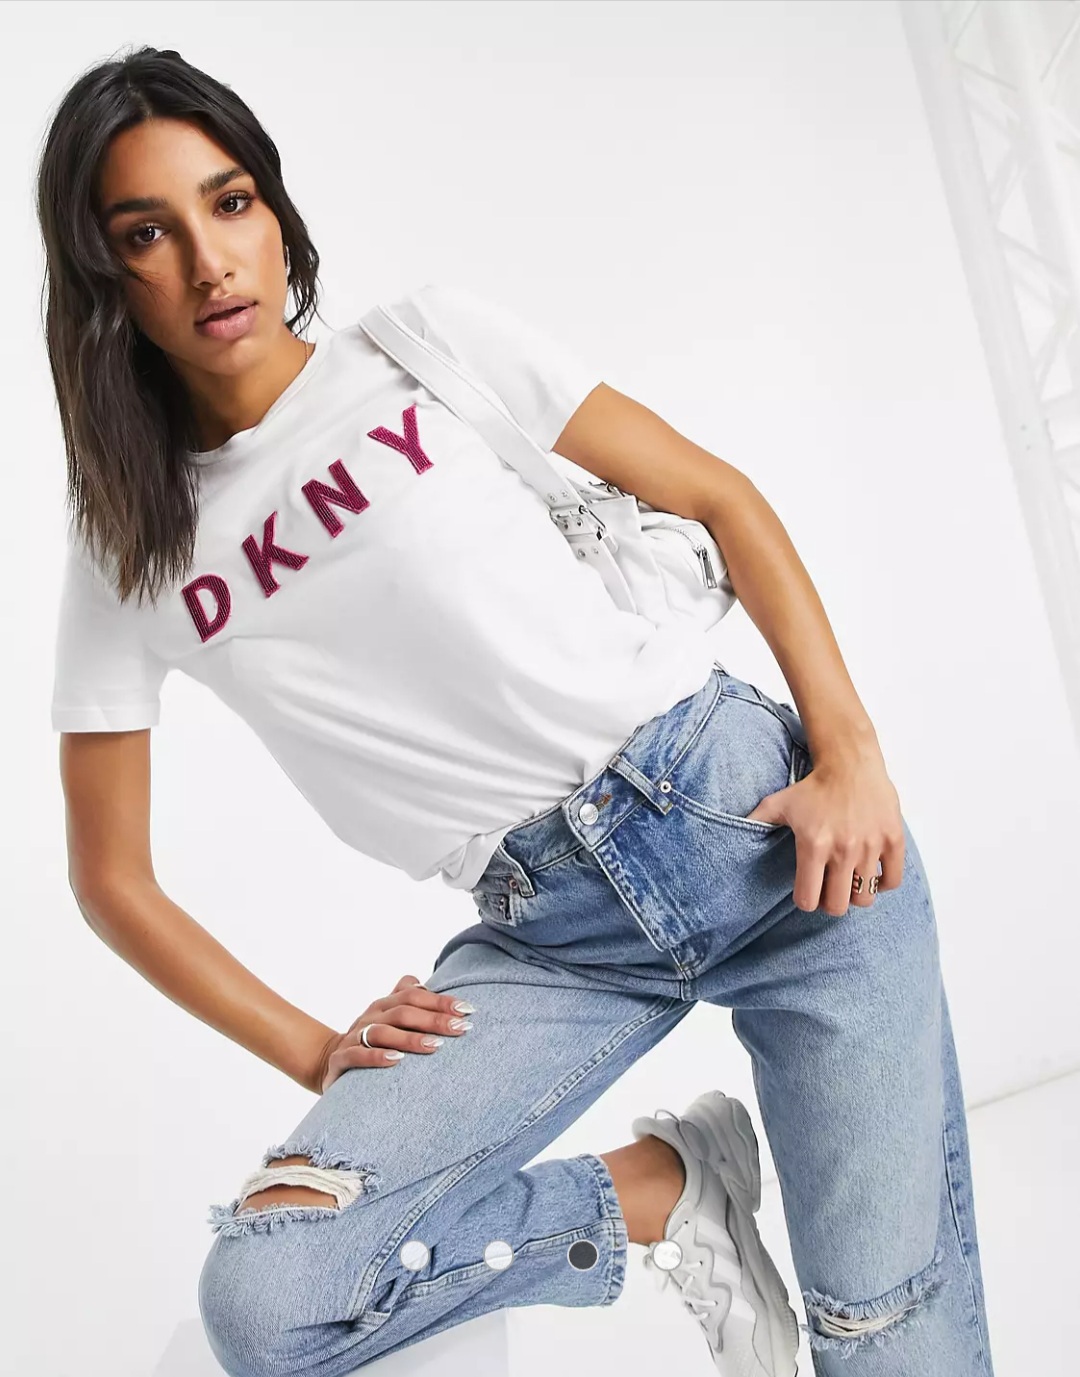 DKNY – ONE Shopping Mall